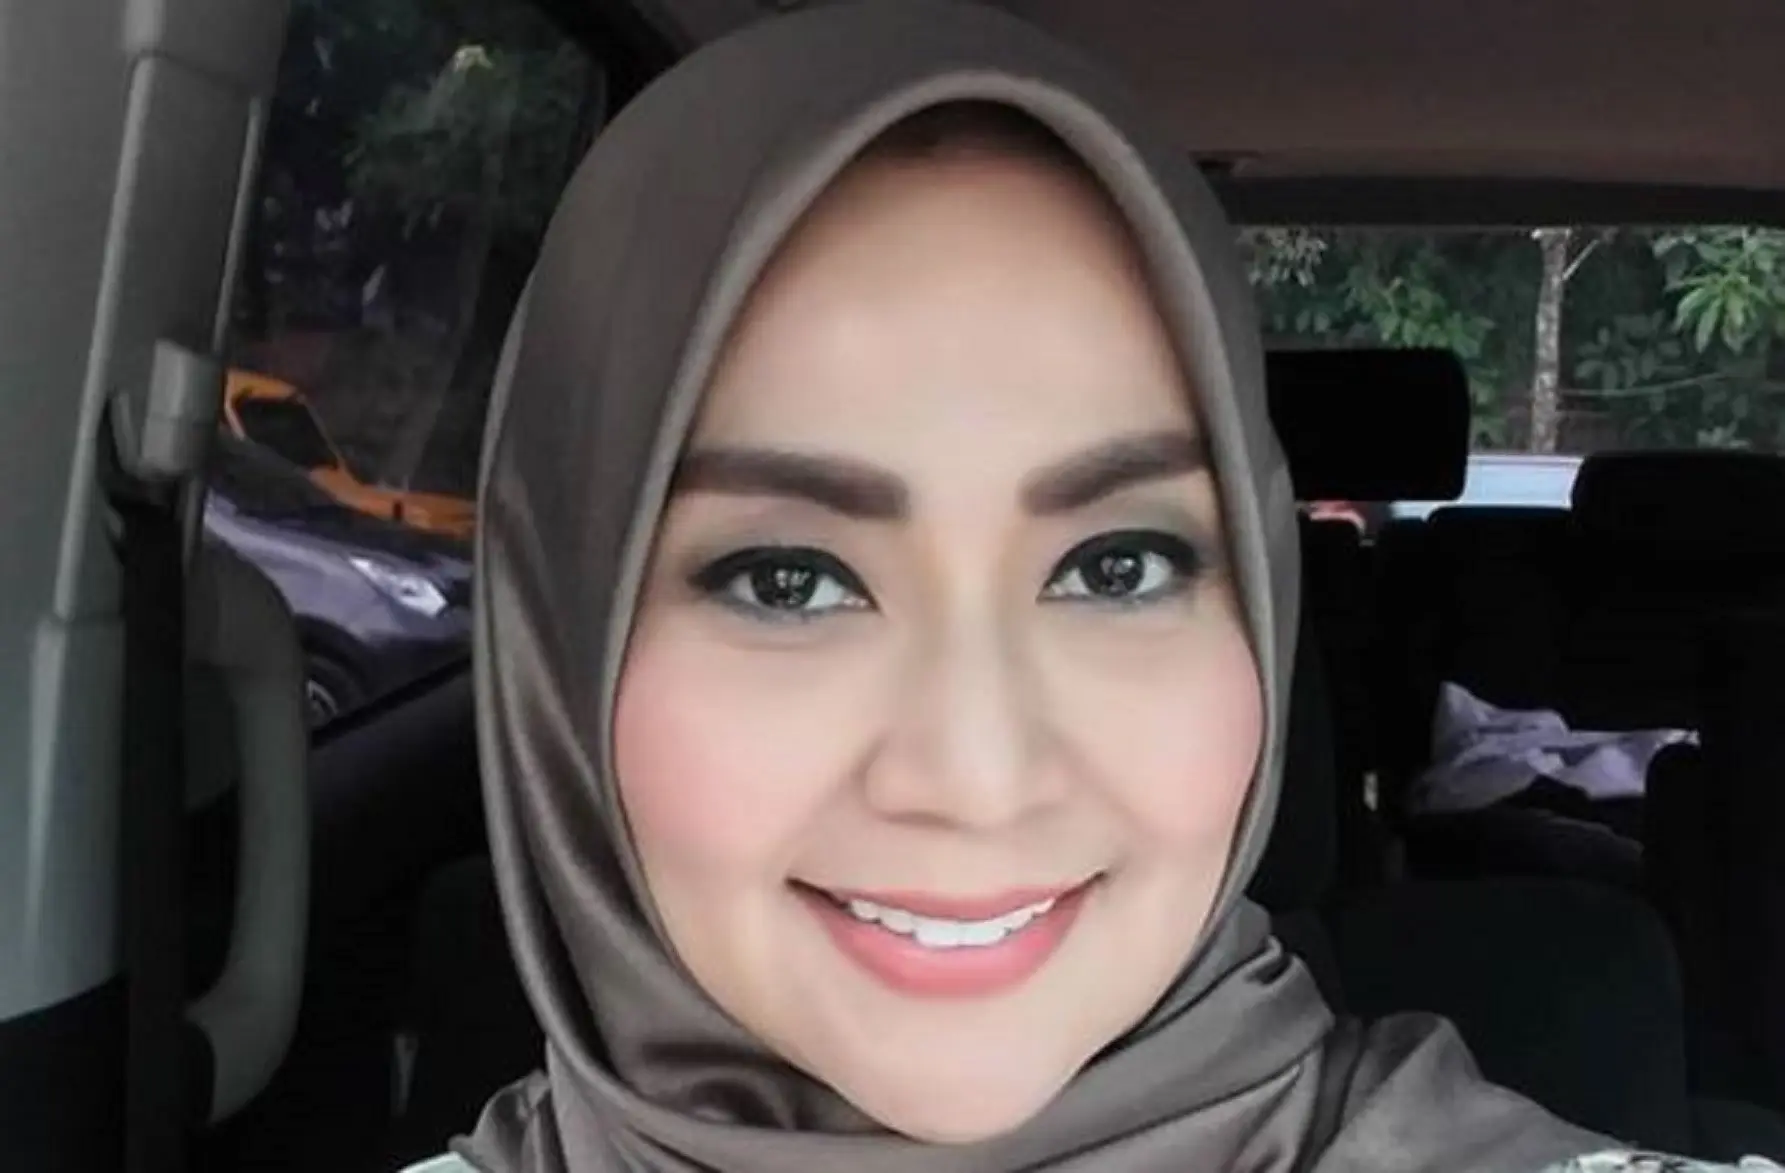 Tessa Kaunang mendapat banyak pujian saat mengenakan jilbab (Instagram/@ thessakaunangtuiit)